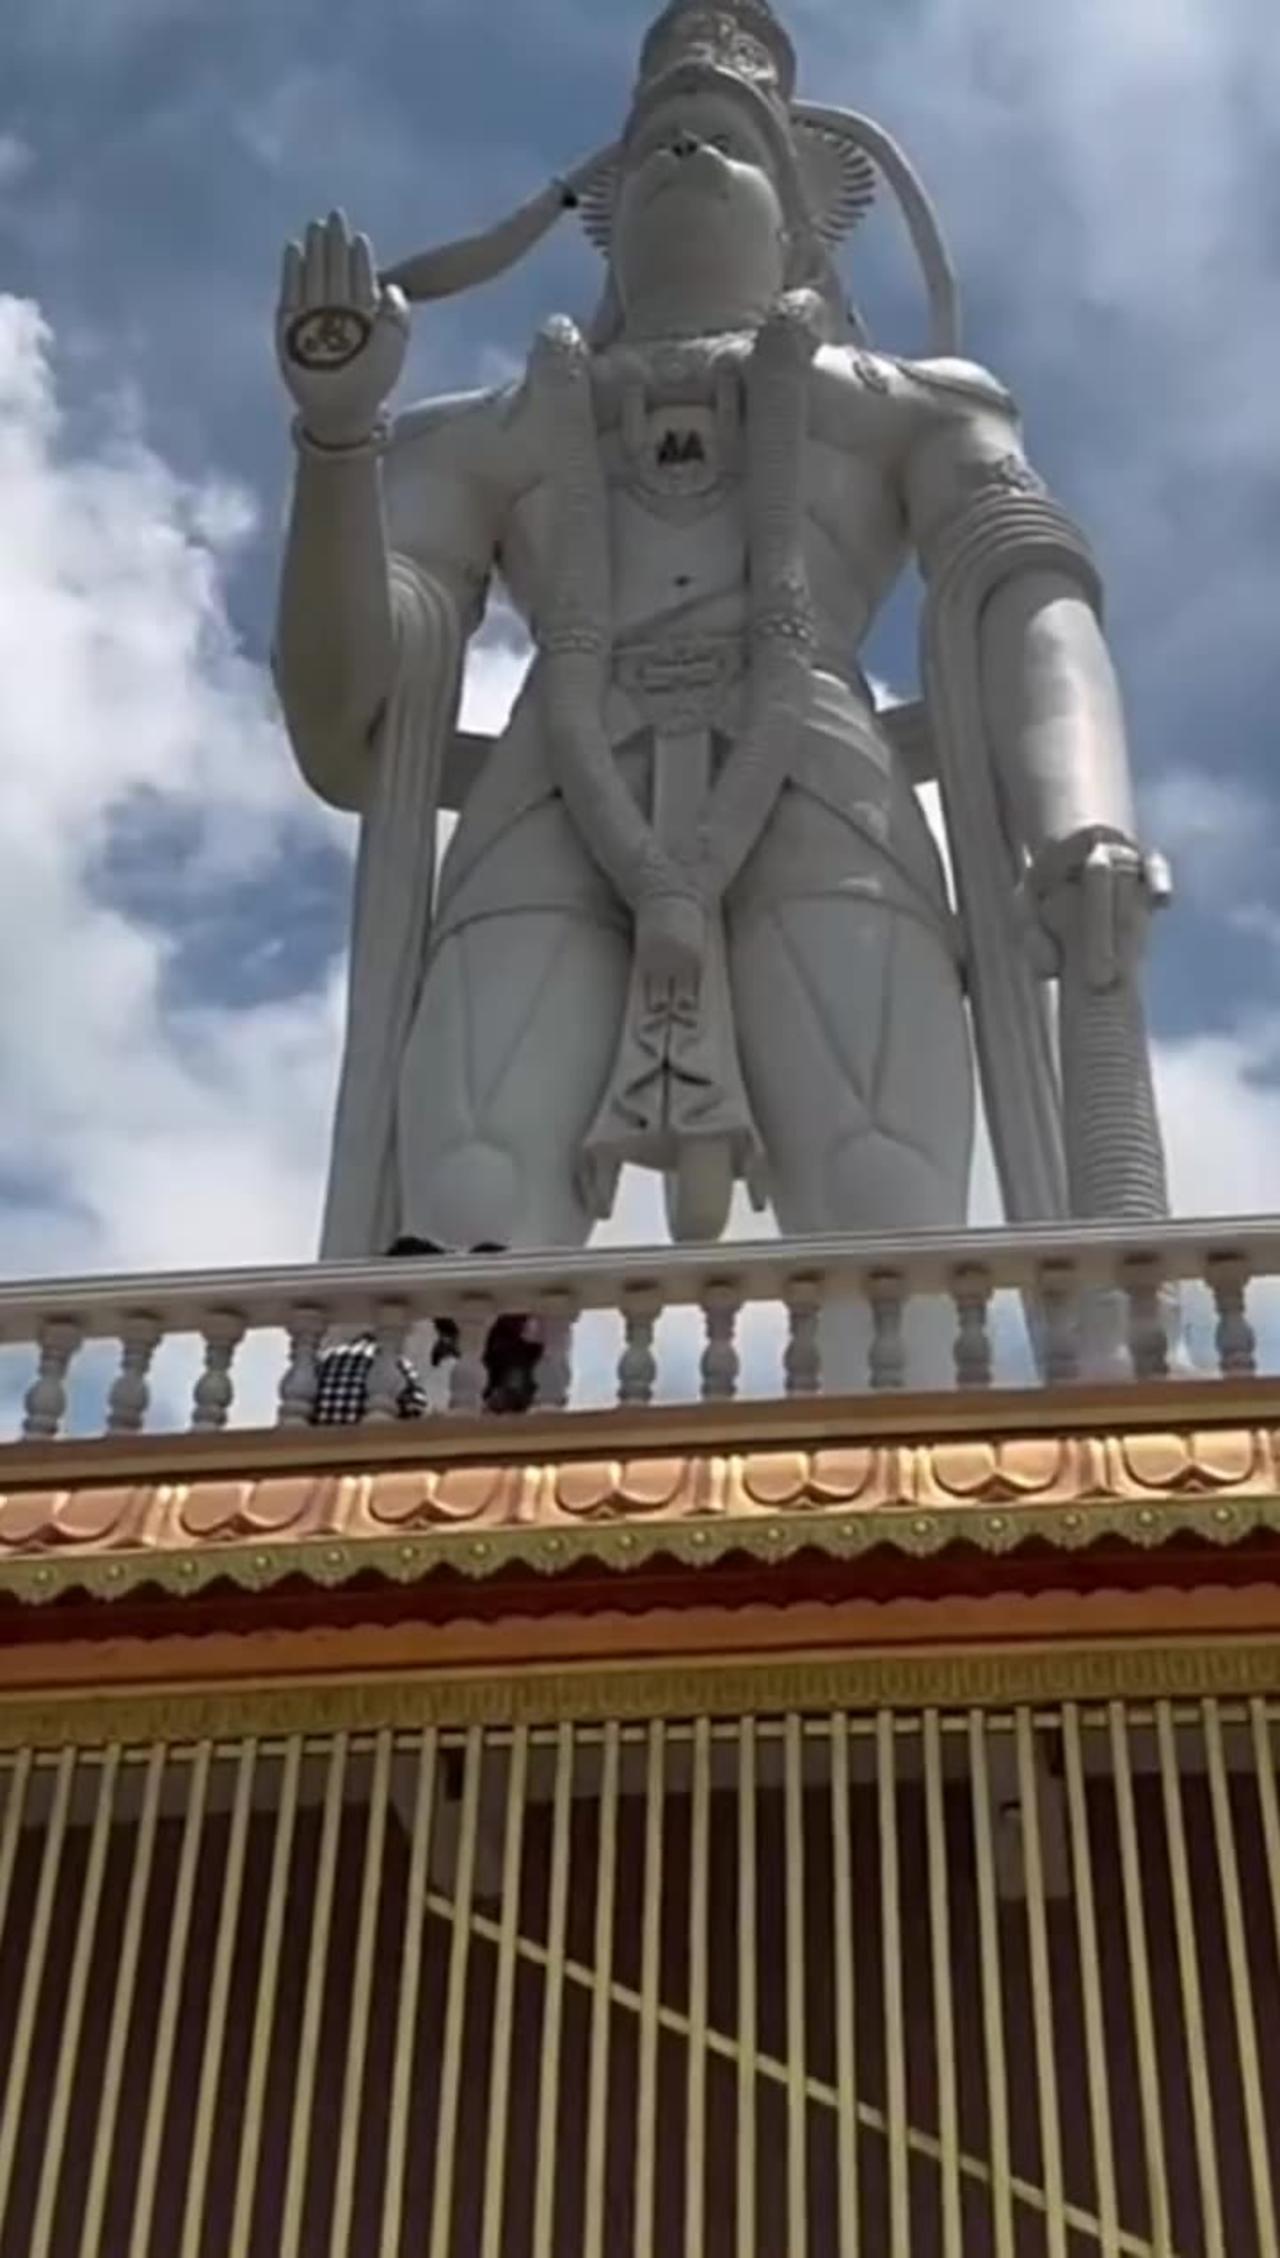 Hanuman jayanti